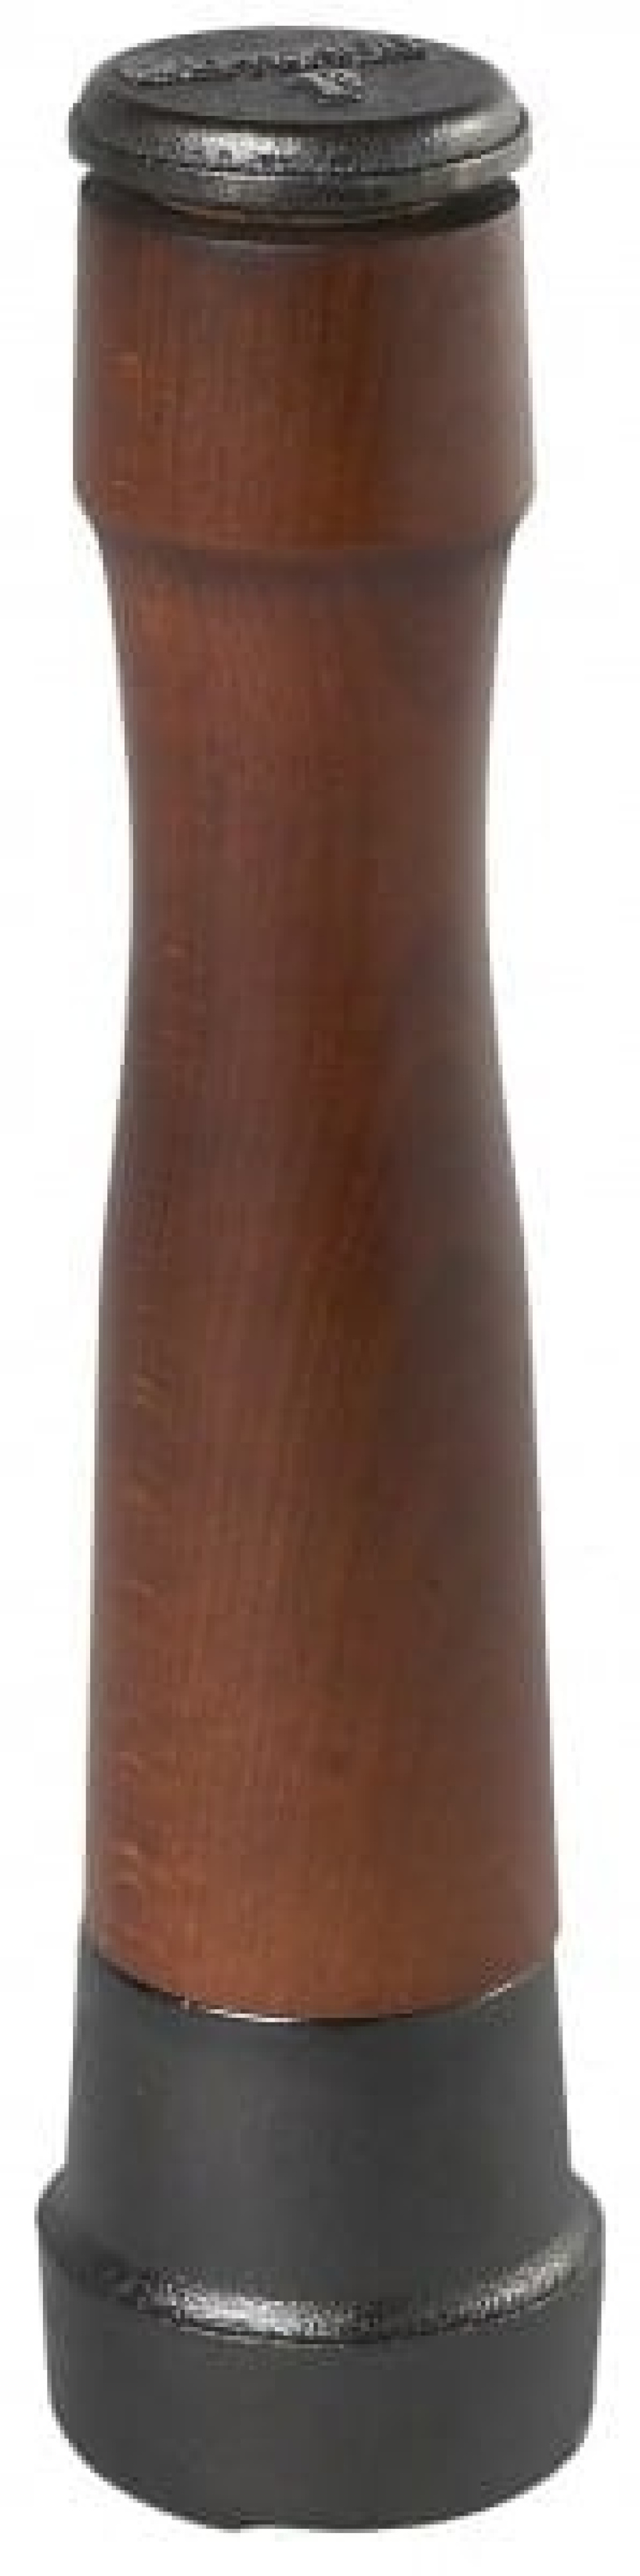 Skeppshult pepparkvarn, 27 cm, Brunbok i gruppen Matlagning / Köksredskap / Salt- & pepparkvarnar hos The Kitchen Lab (1146-13179)